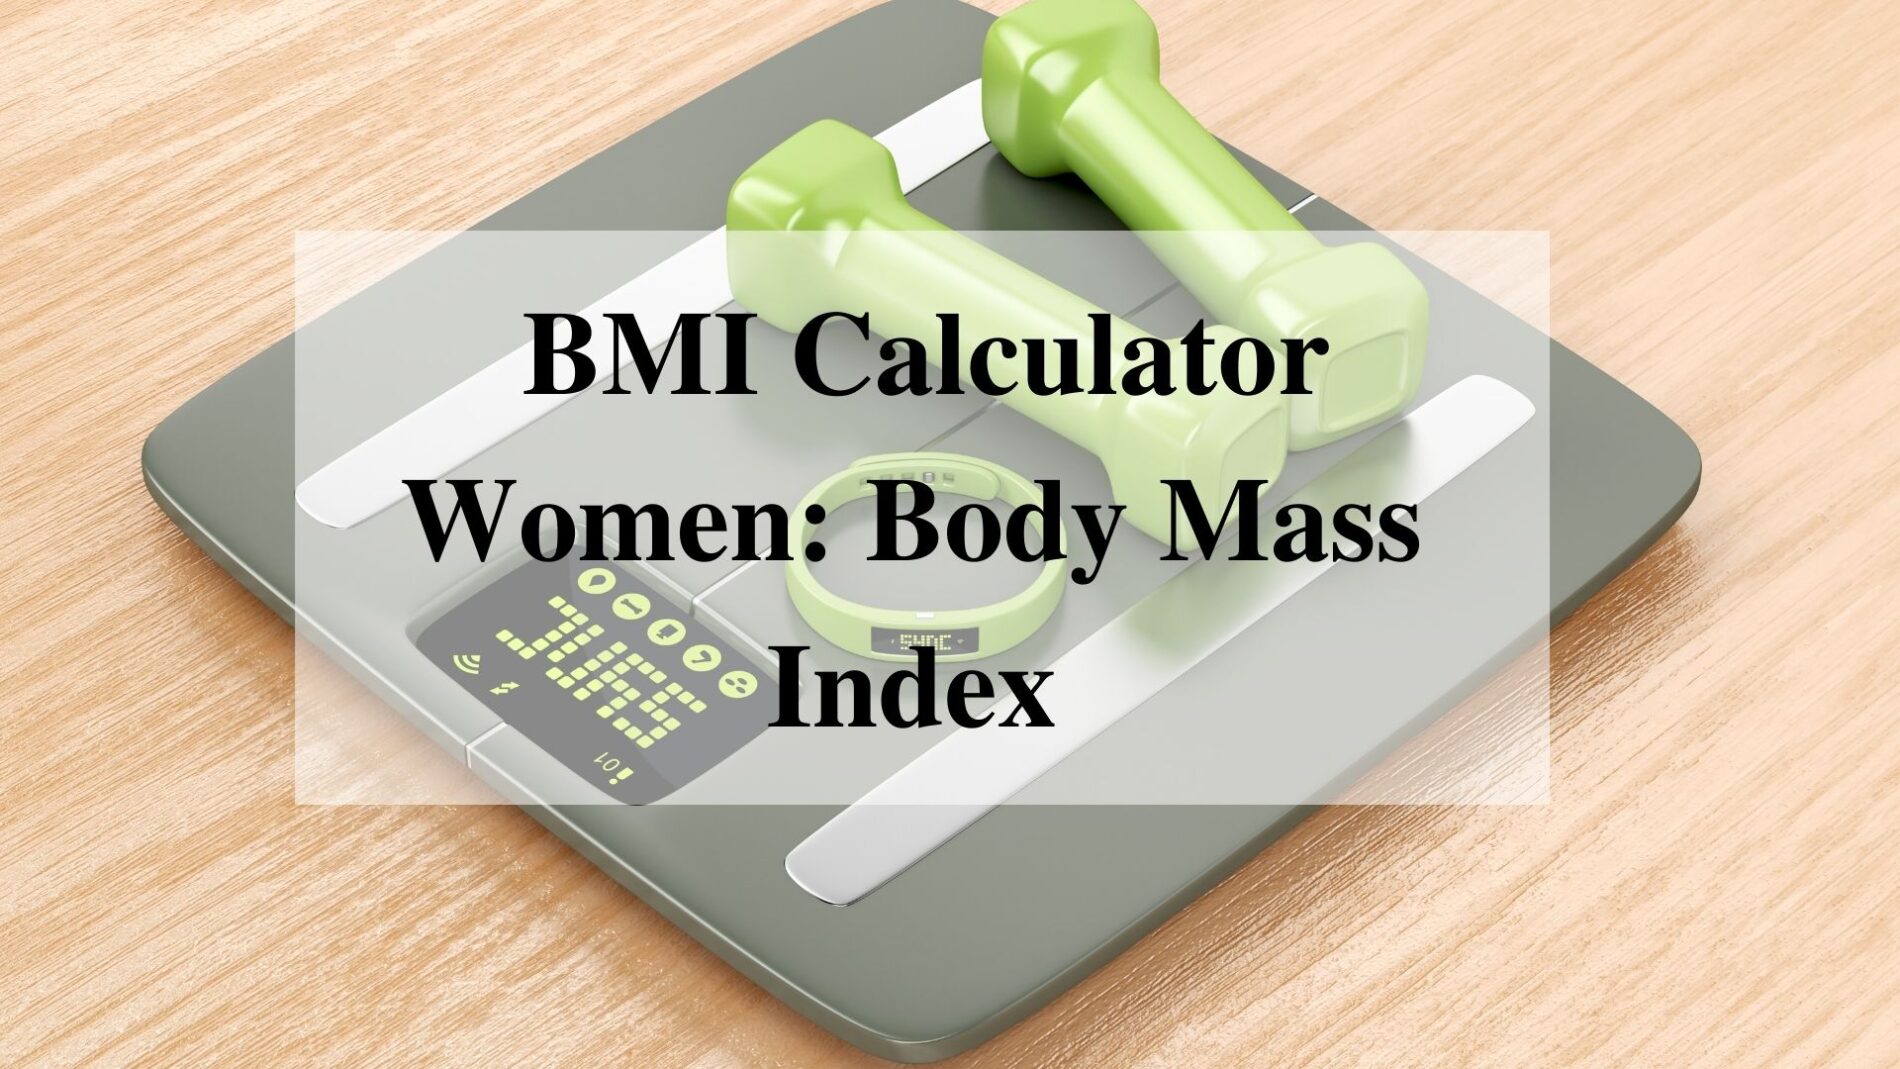 https://mantracare.org/wp-content/uploads/2021/11/BMI-Calculator-Women-Body-Mass-Index.jpg